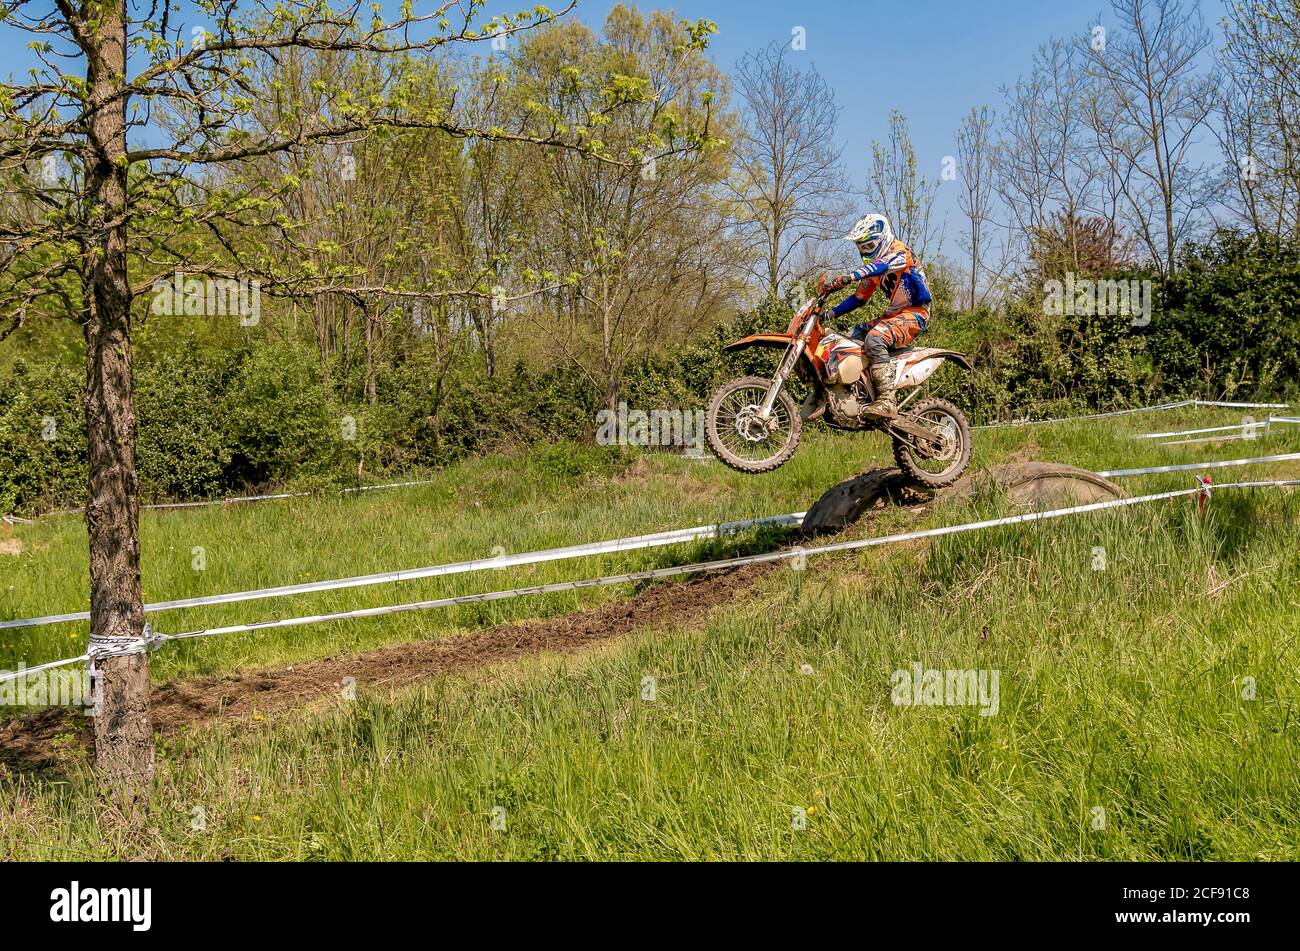 Biandronno, Lombardei, Italien - 22. April 2018: Motocross-Fahrer beim Springen vom Trampolin über der Straße. Offene Wettbewerbe im Motocross. Stockfoto